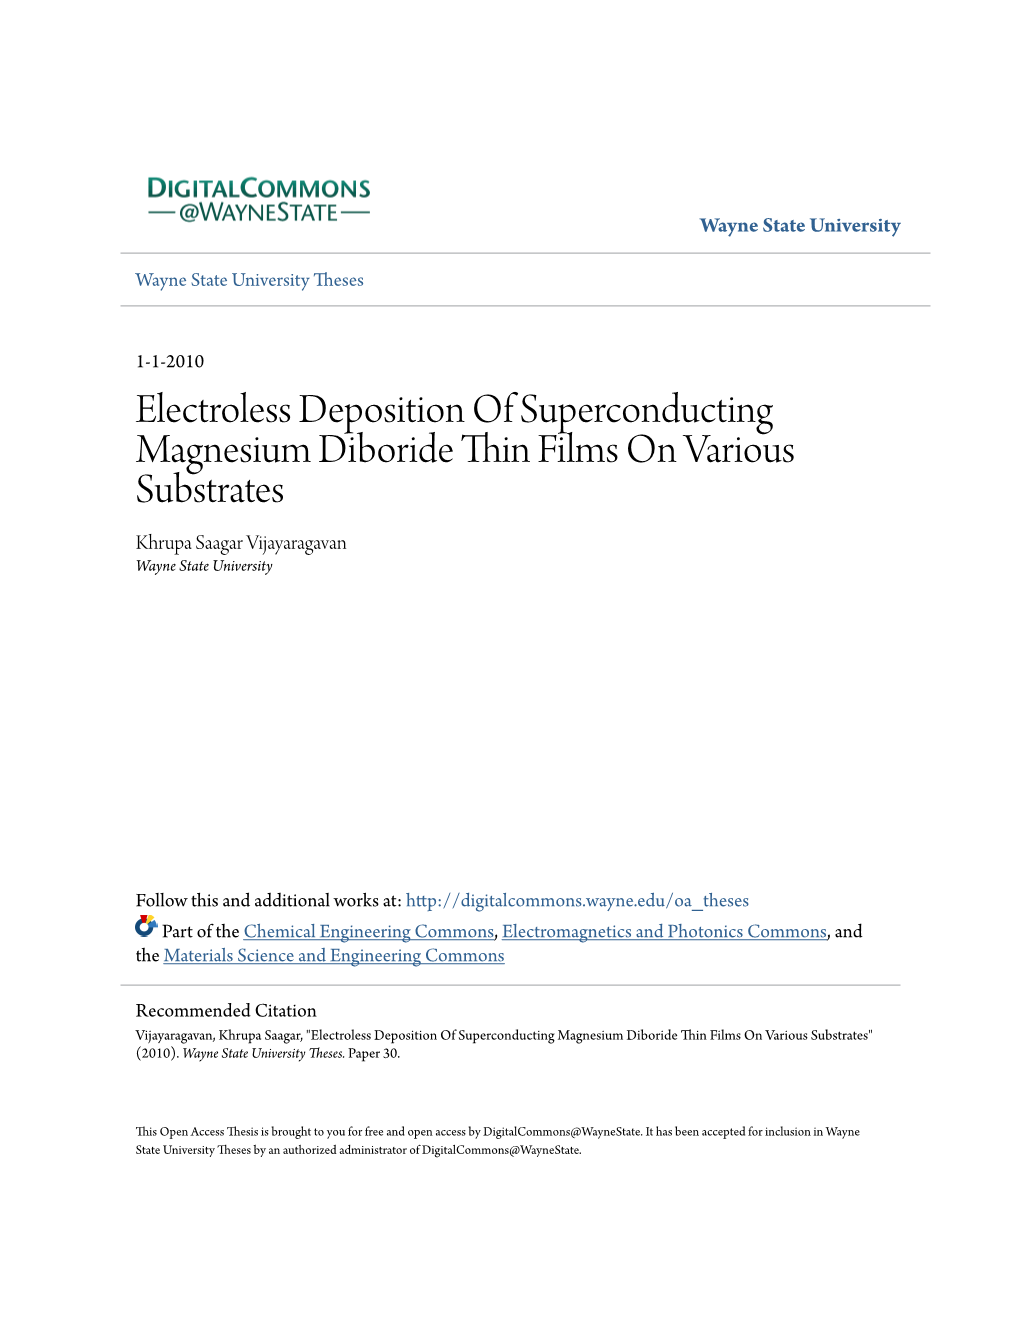 Electroless Deposition of Superconducting Magnesium Diboride Thin If Lms on Various Substrates Khrupa Saagar Vijayaragavan Wayne State University